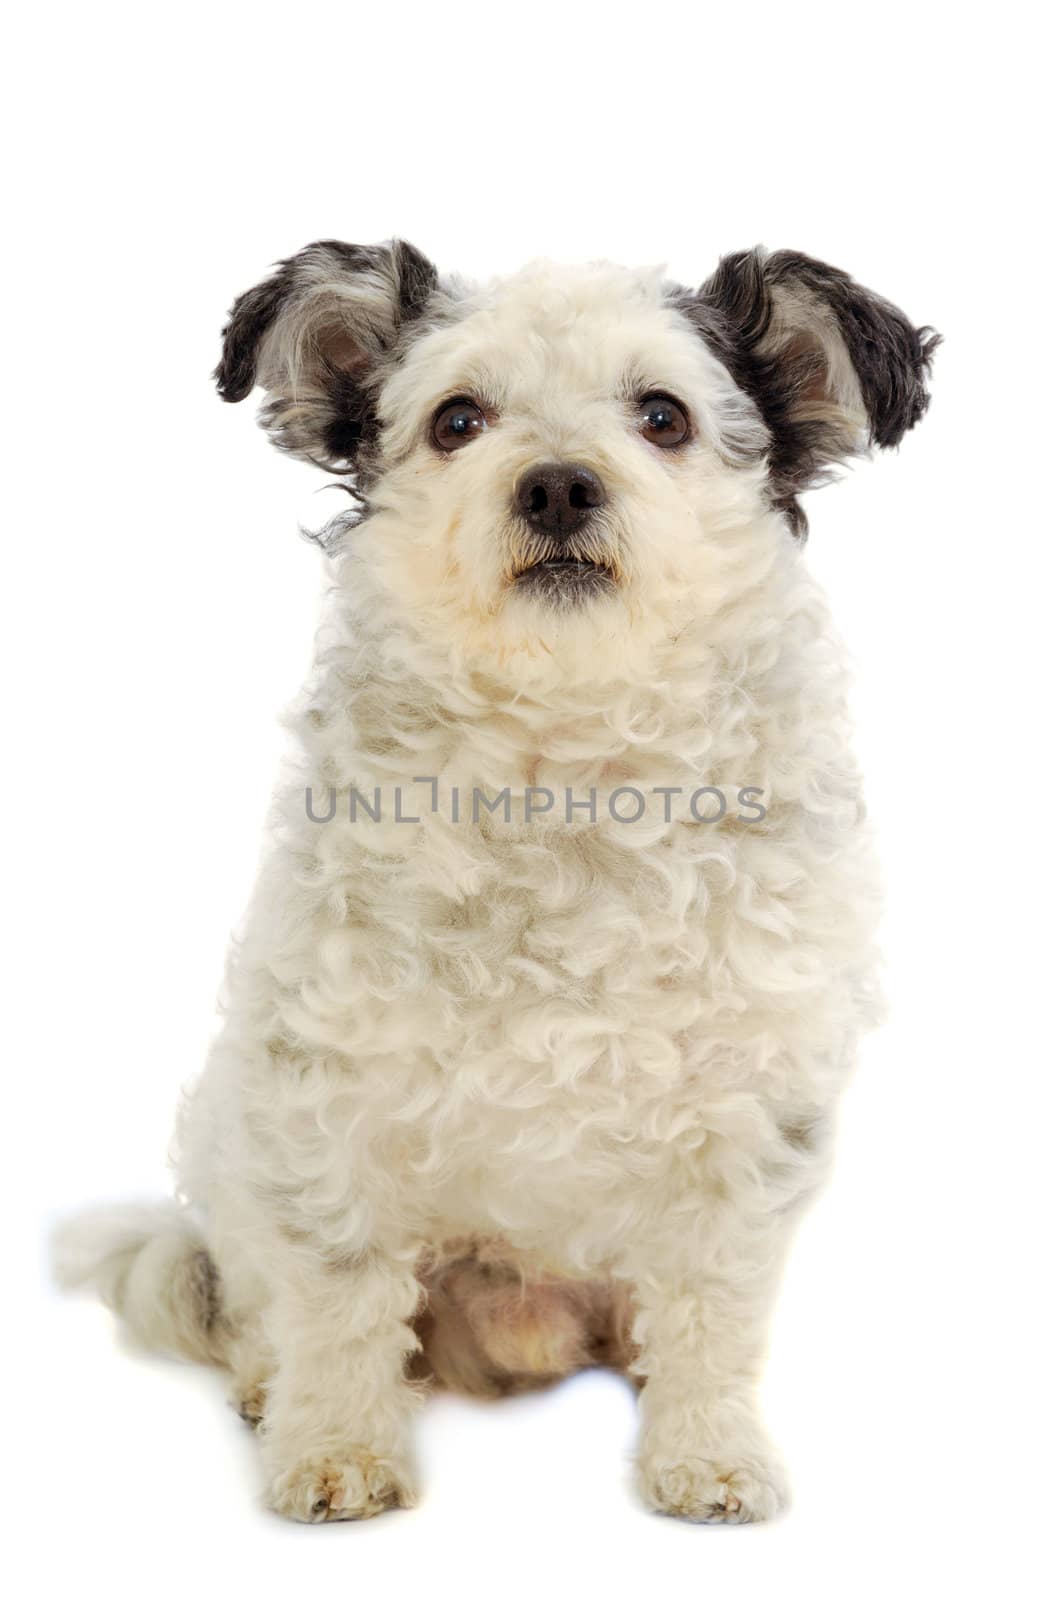 Small dog sitting on white background